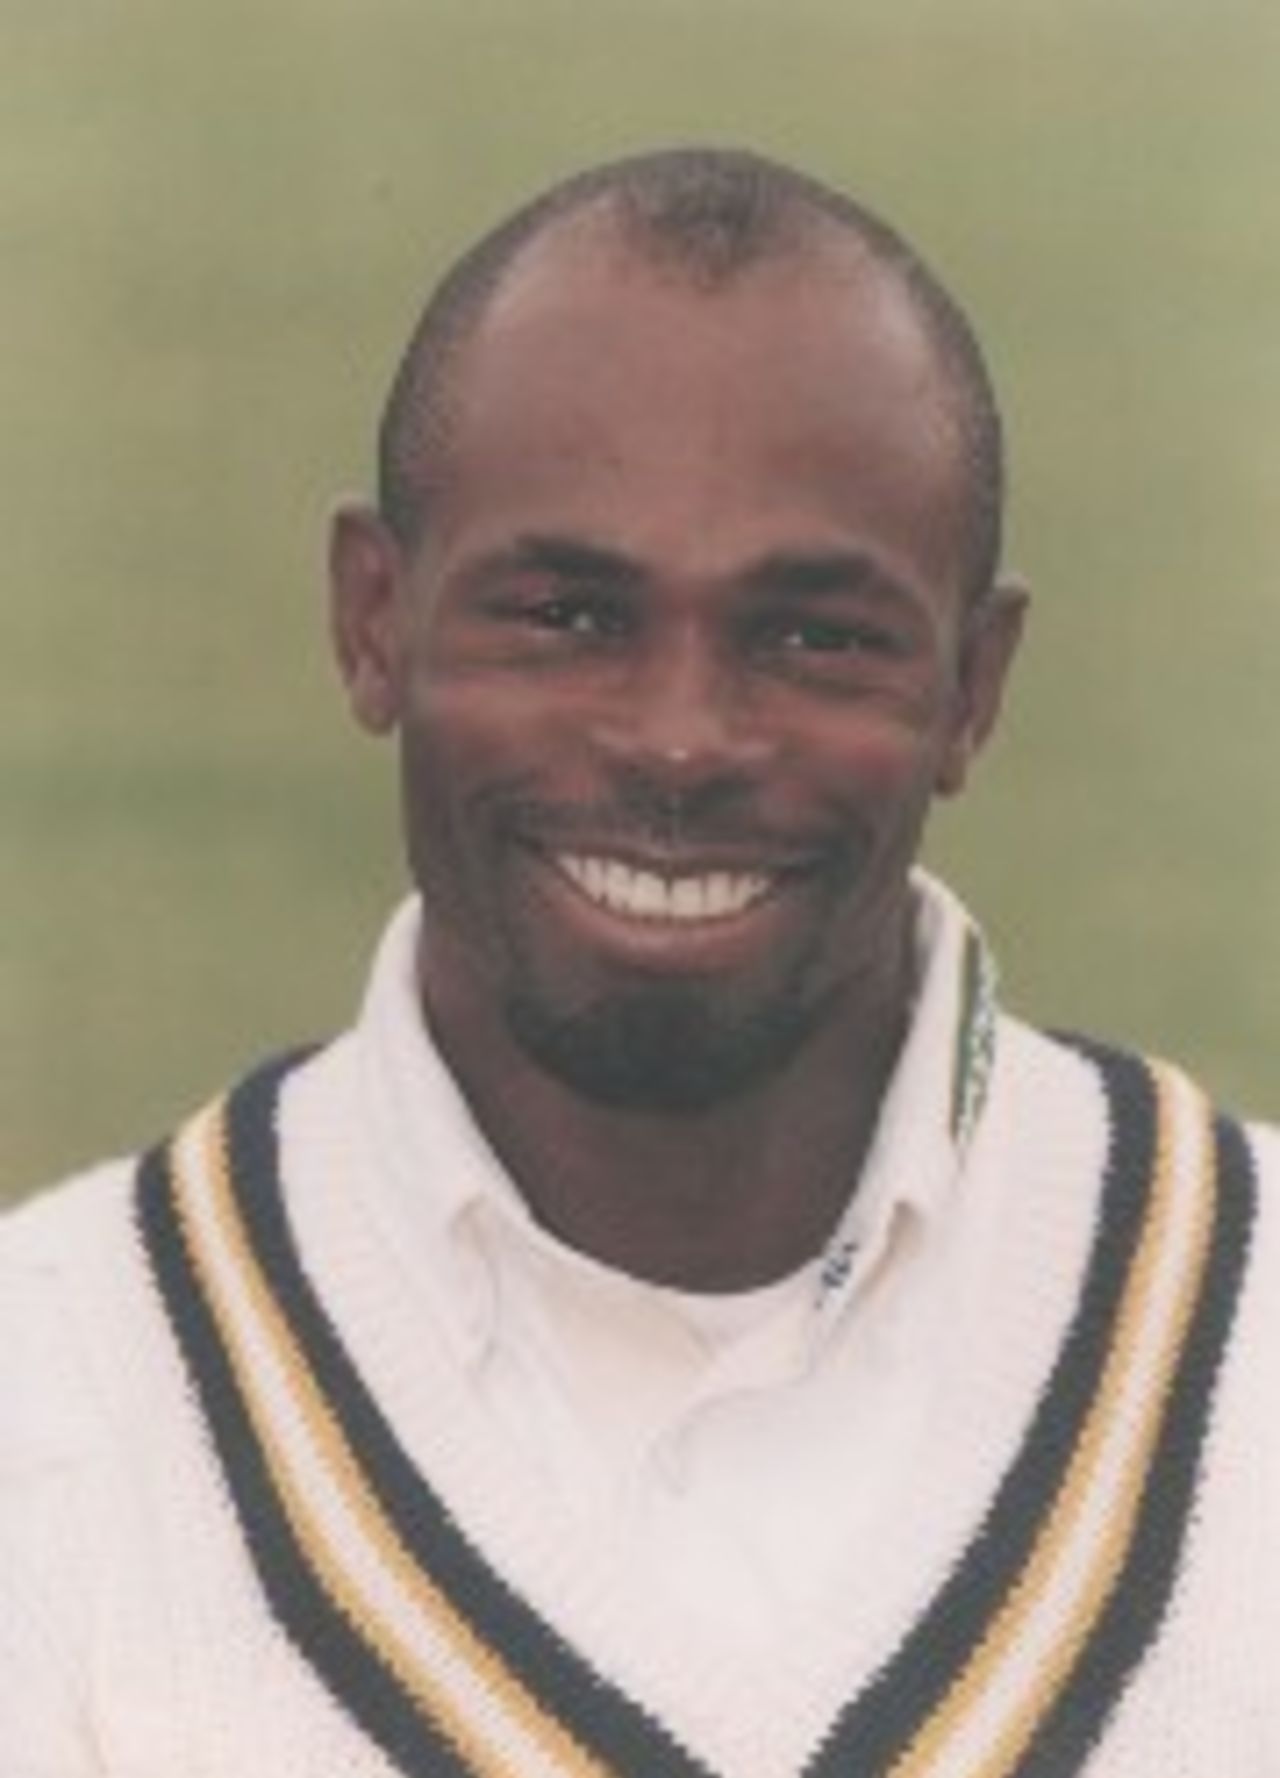 Cardigan Connor (Hampshire bowler)